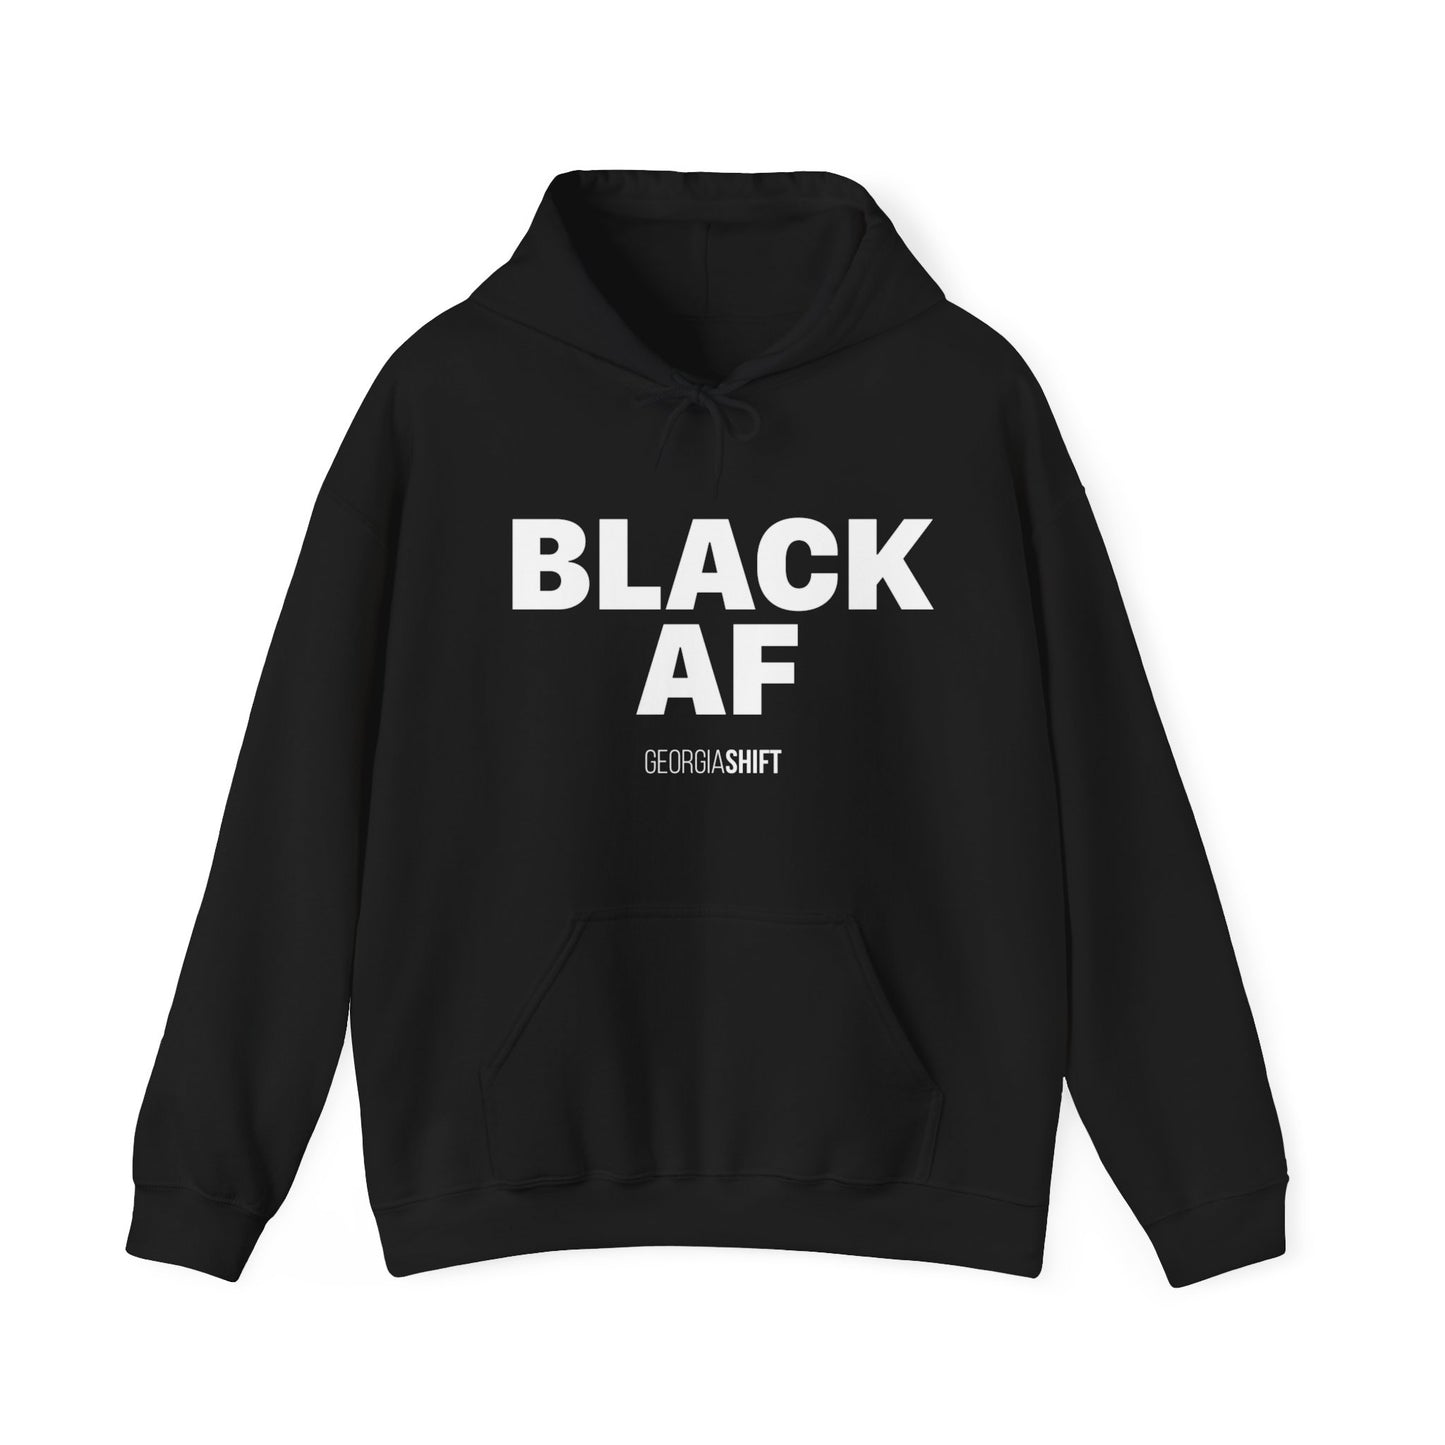 BLACK AF by Georgia Shift  Hooded Sweatshirt